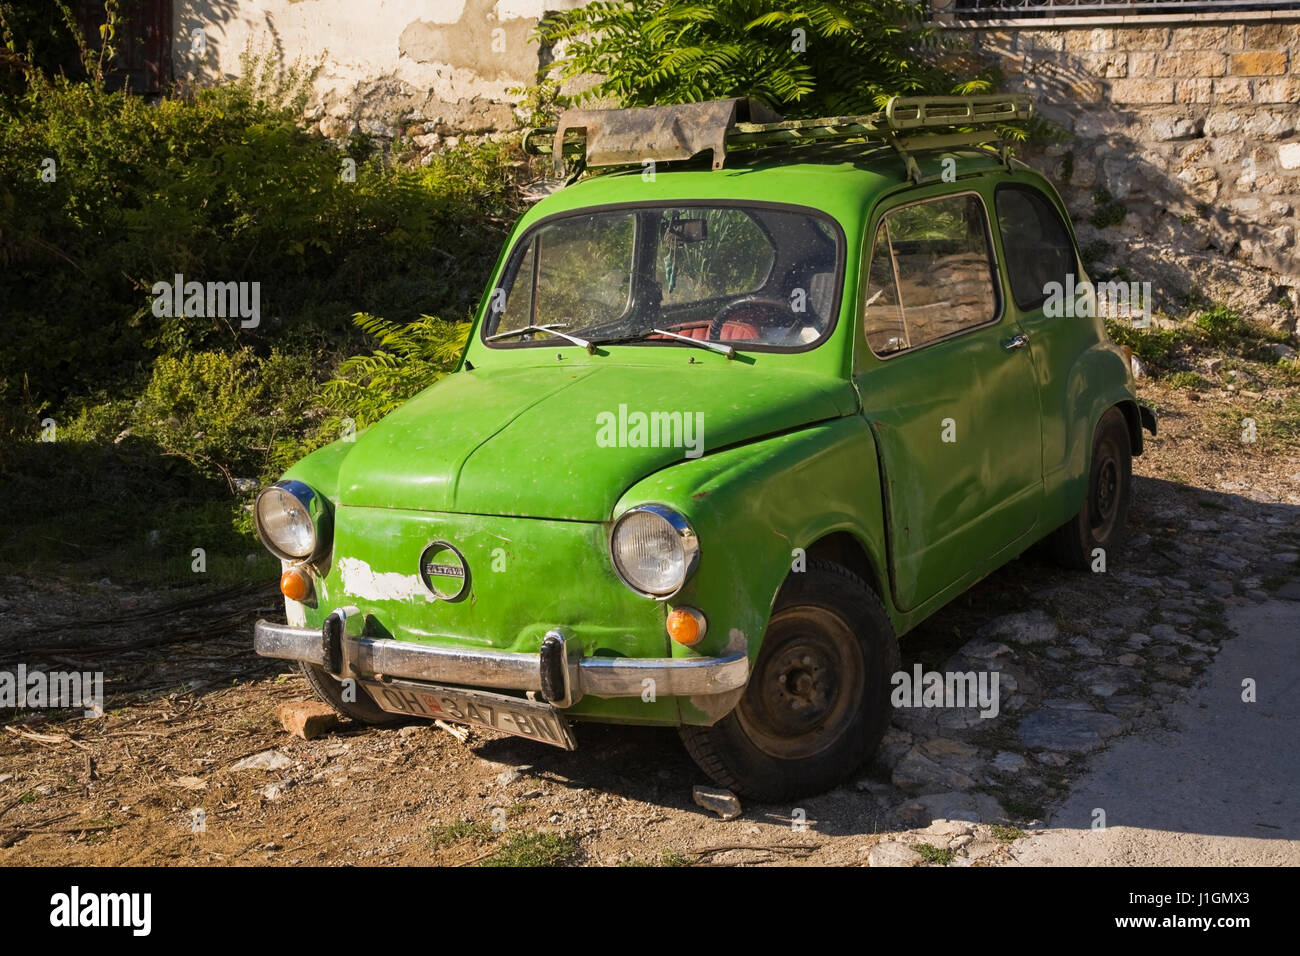 Parked green old model Zastava car nicknamed Fico or Ficek manufactured in the former Yugoslavia, Ohrid, Macedonia, Eastern Europe Stock Photo